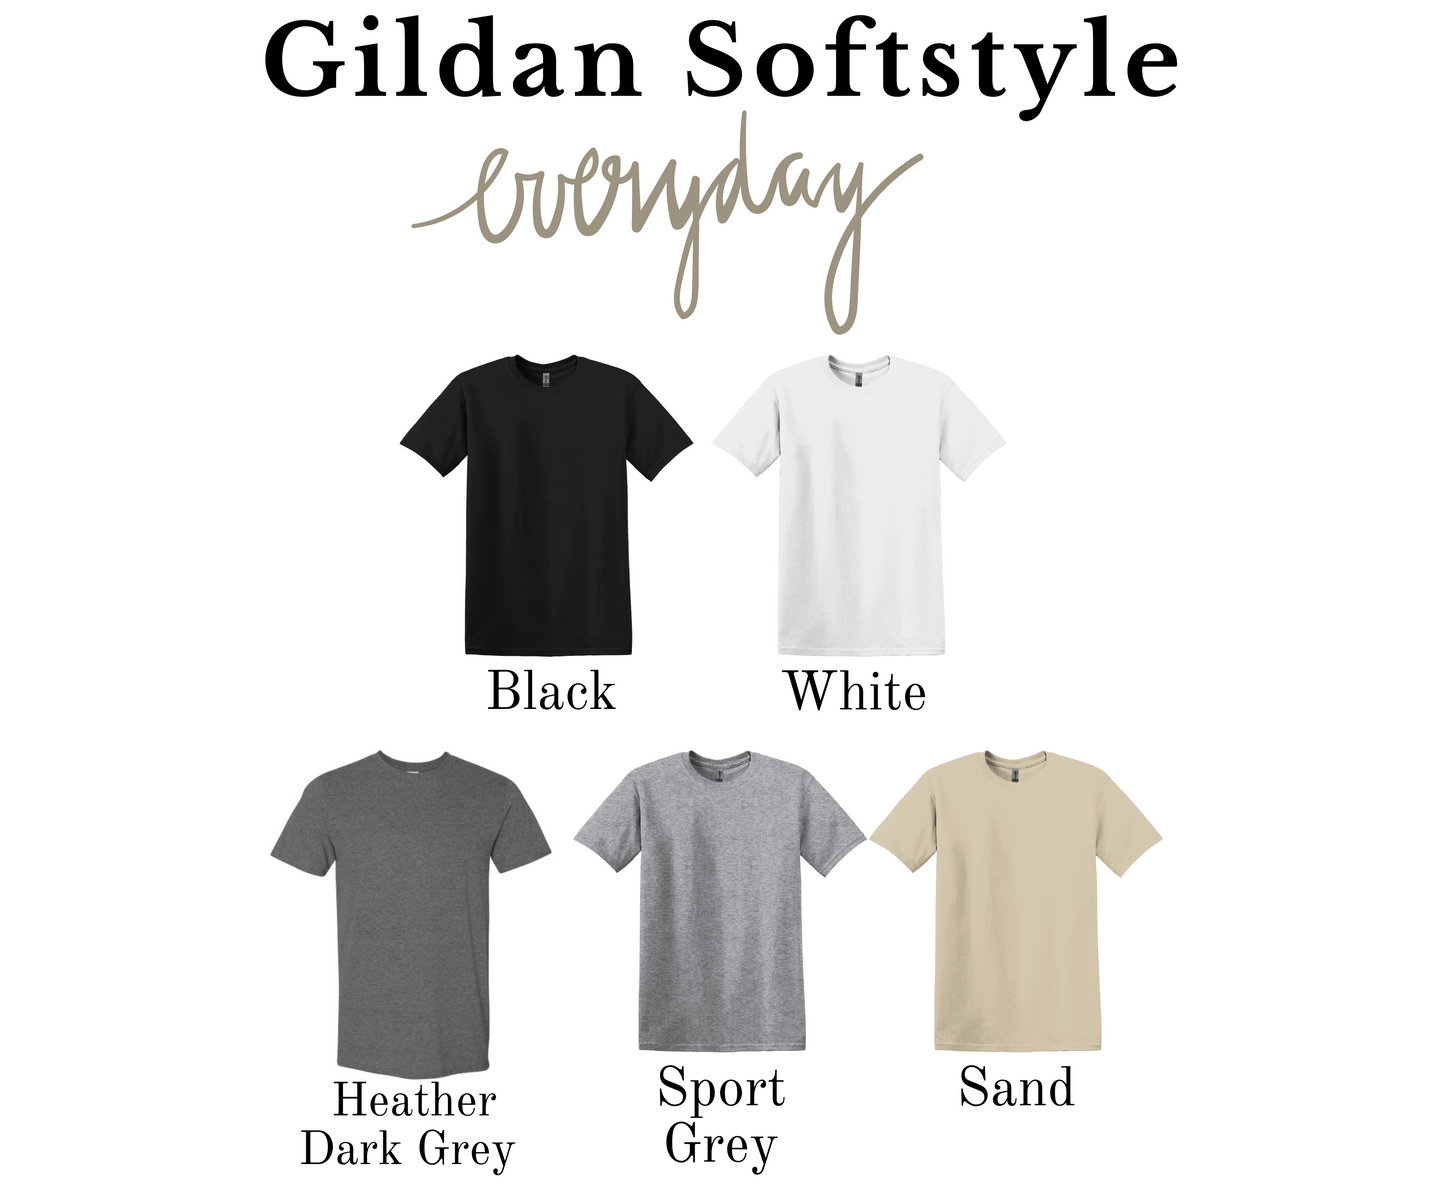 Volleyball Arch Gildan Softstyle Sweatshirt or T-shirt